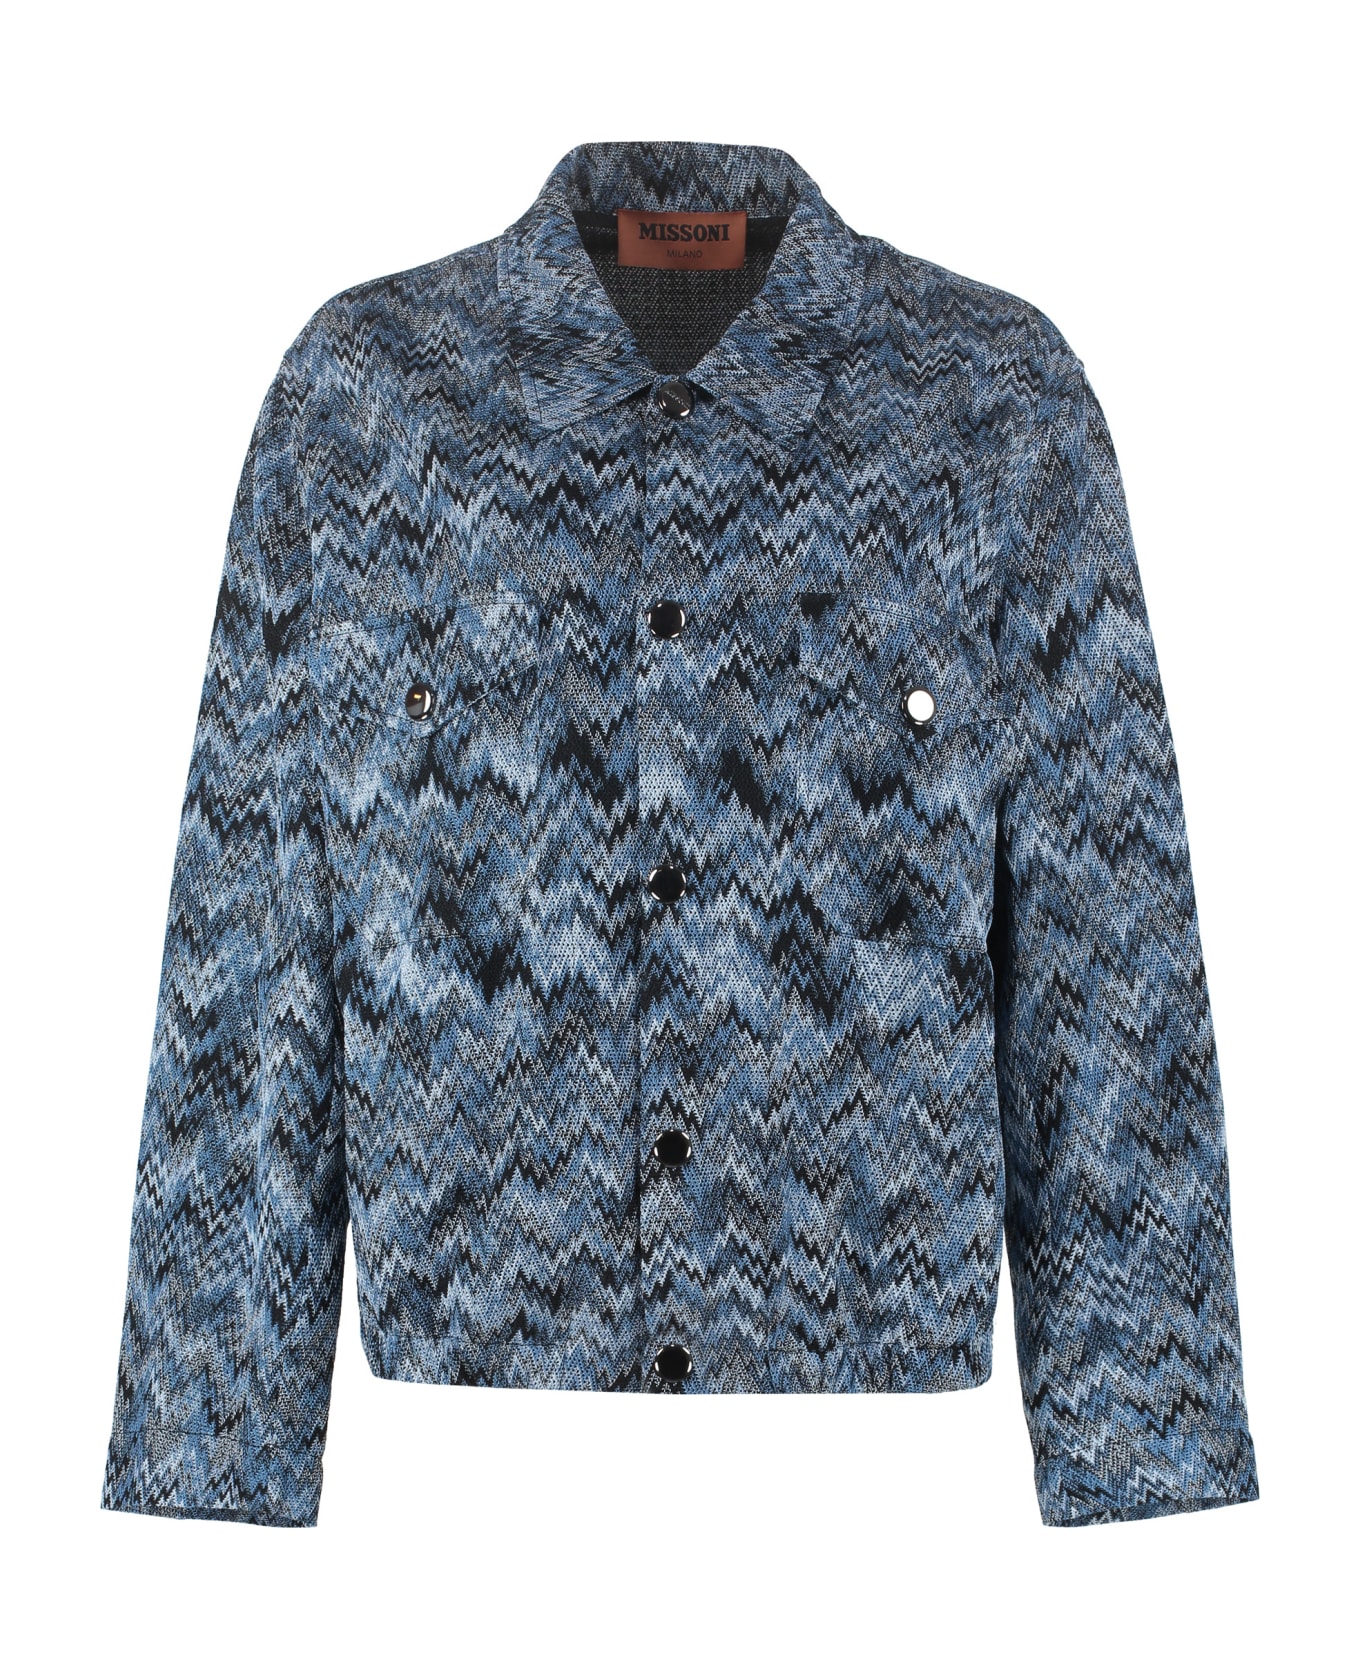 Missoni Chevron Motif Knitted Jacket - blue